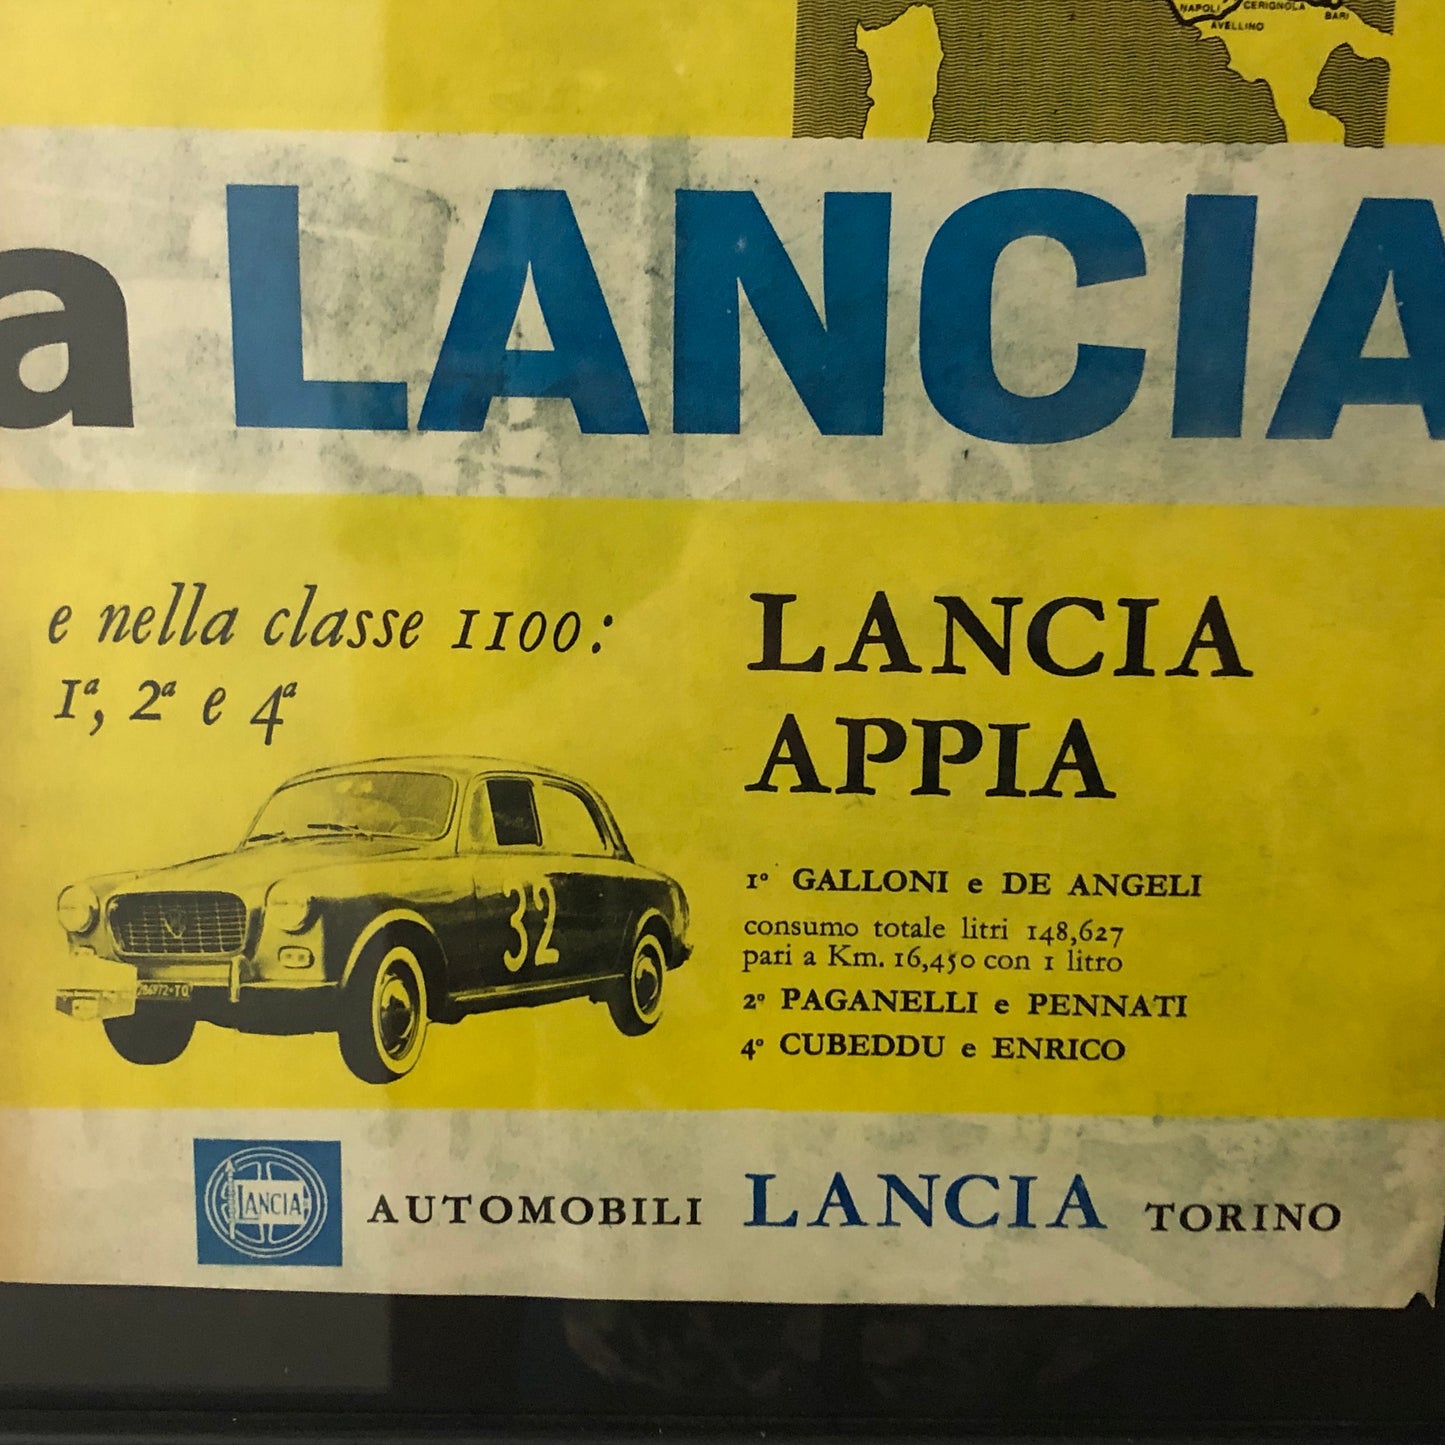 Lancia Advertisement Year 1959 Lancia Appia and Flaminia Win Mobilgas Economy Race 59 